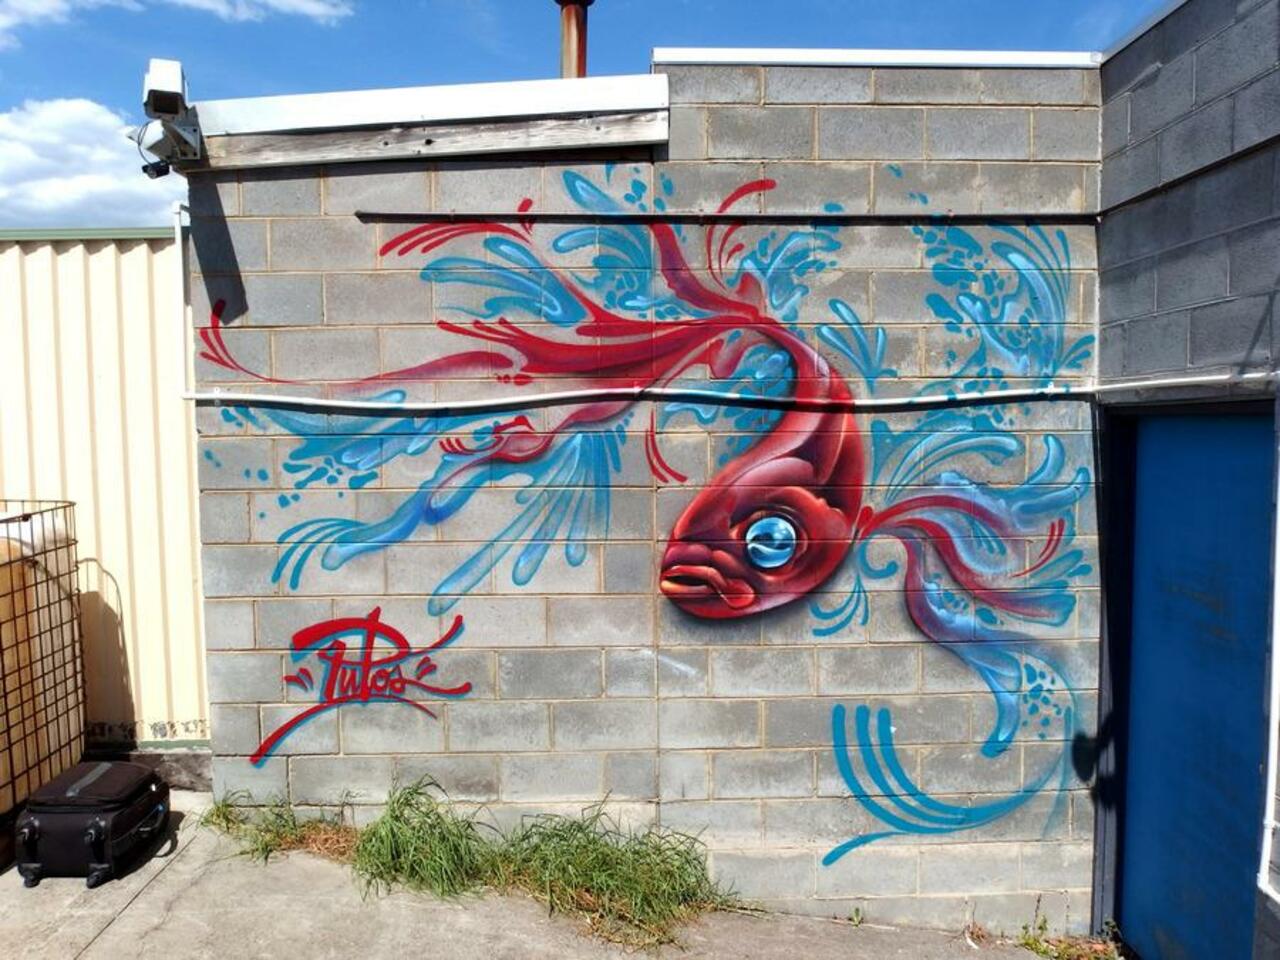 Streetart by Putos in Australia (http://globalstreetart.com/putospaint  )

#streetart #urbanart #mural #art #graffiti http://t.co/Y9fWimNsAf